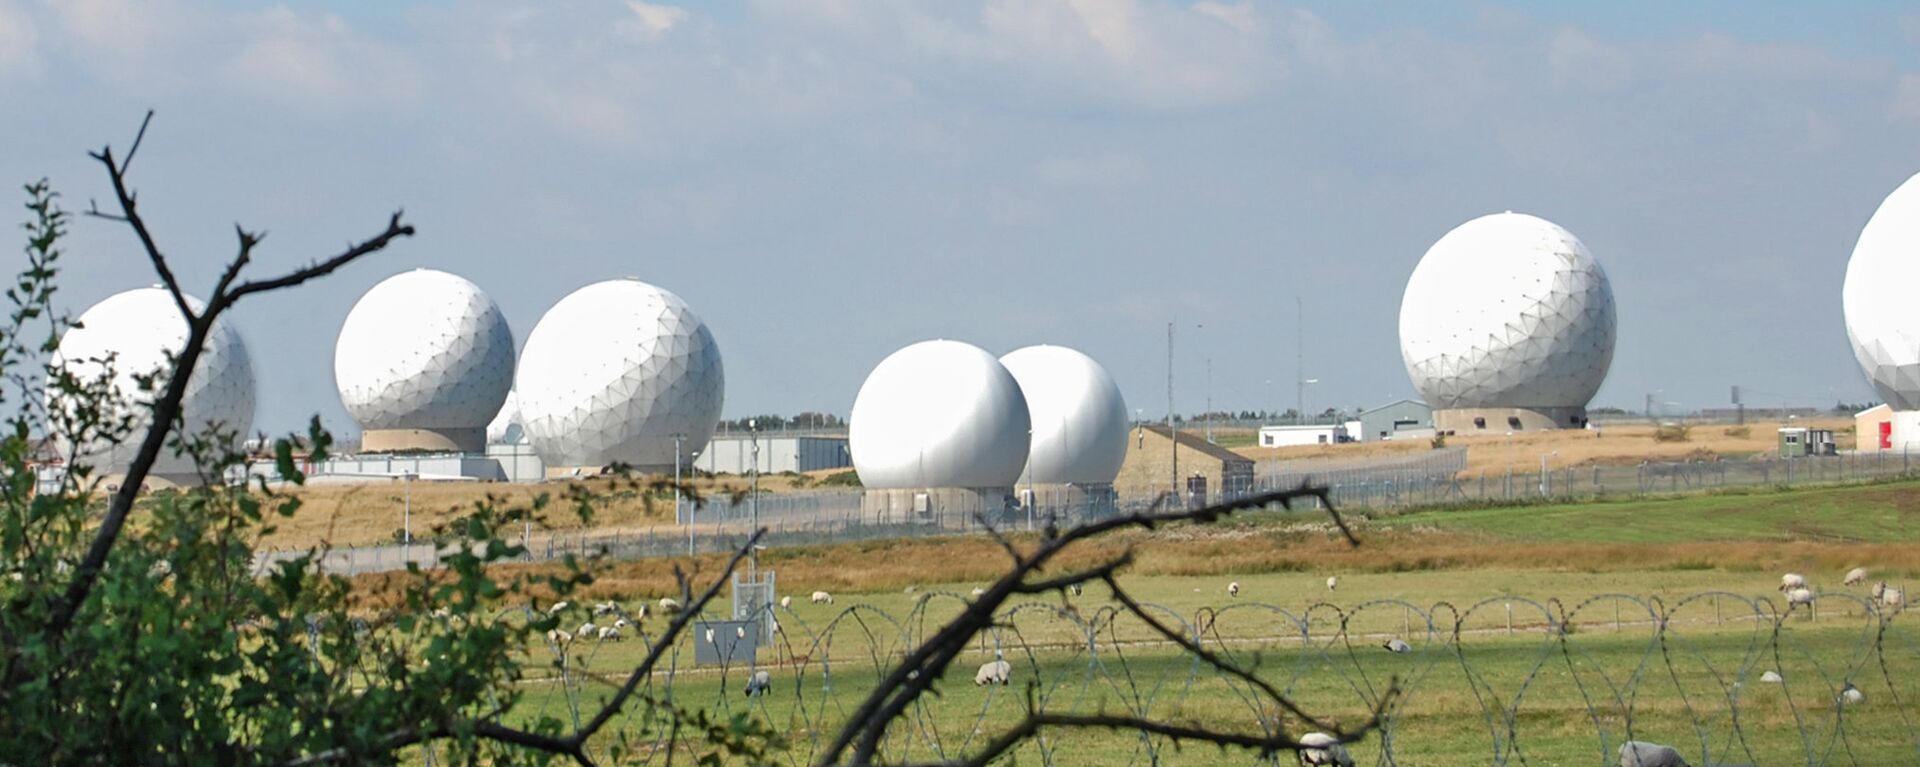 Surveillance domes at Menwith Hill - Sputnik International, 1920, 07.09.2016